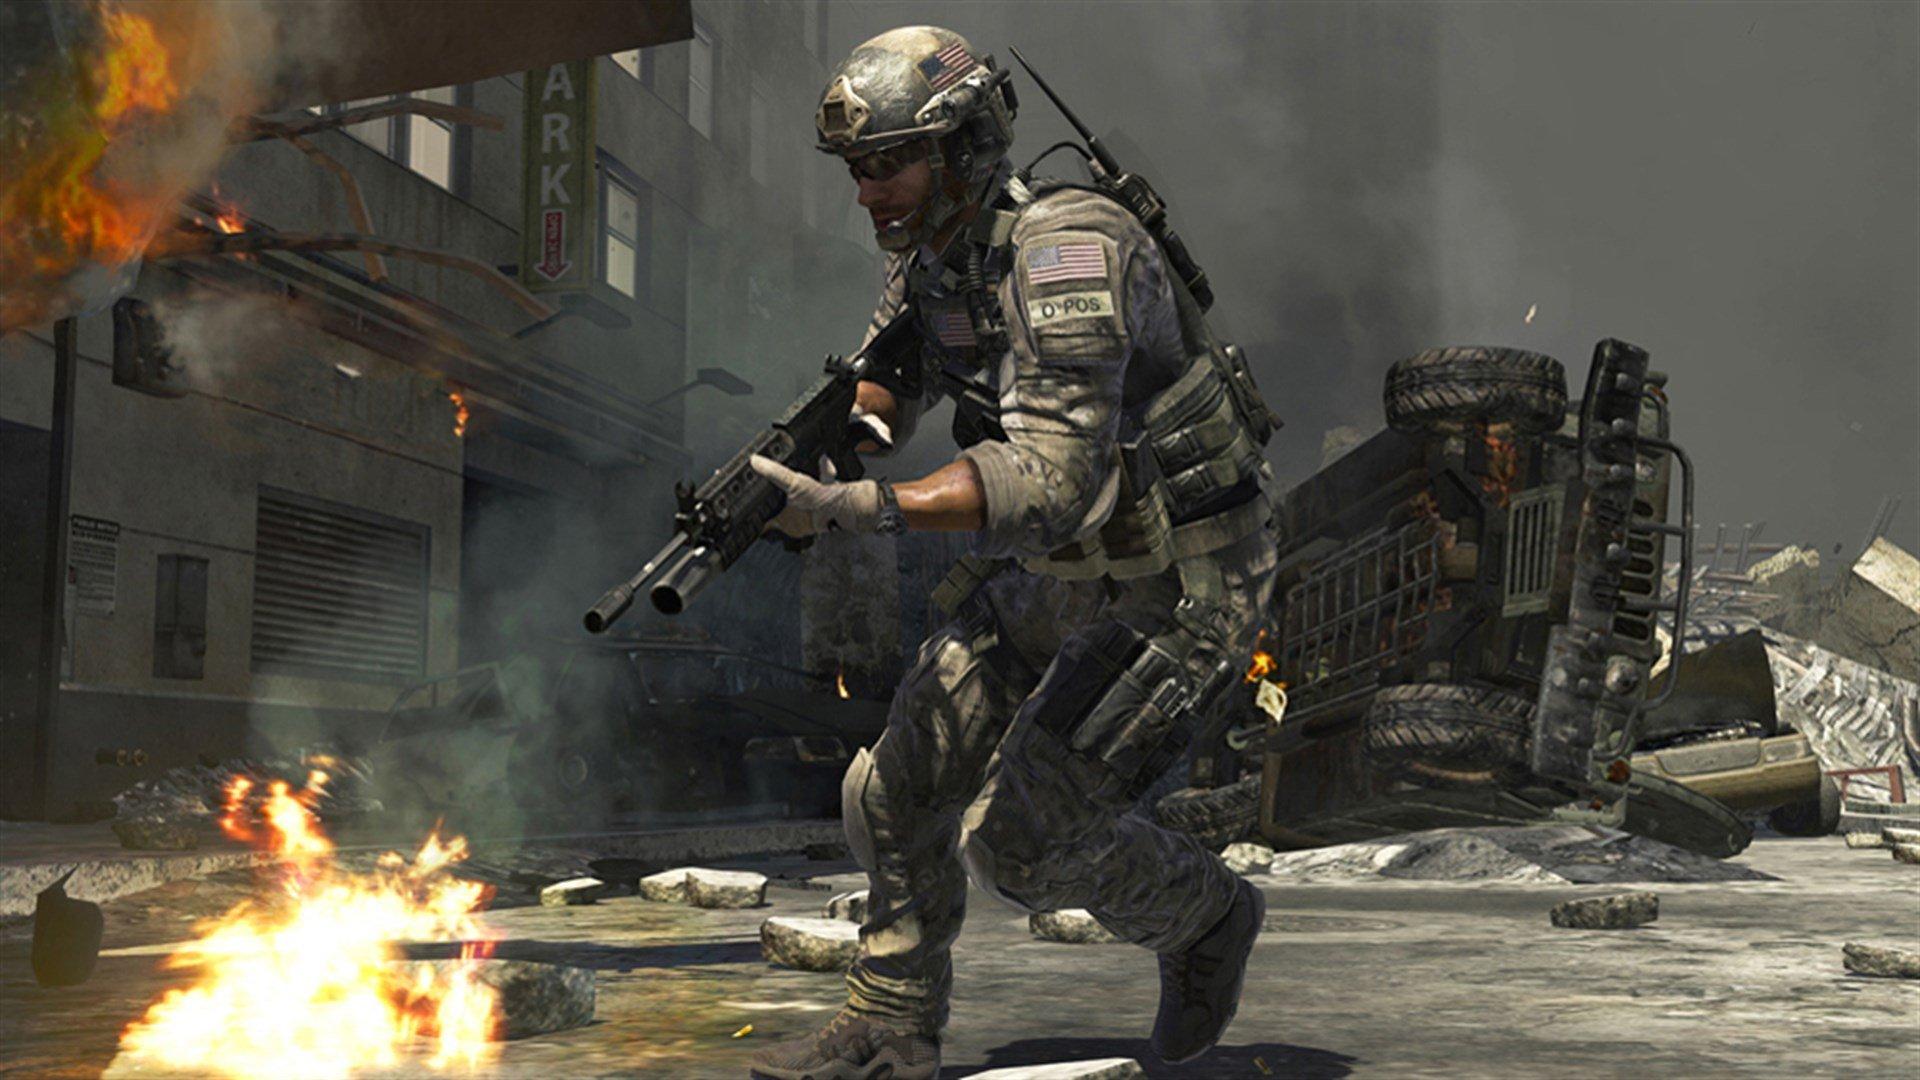 Call of Duty Modern Warfare 3 - Xbox 360